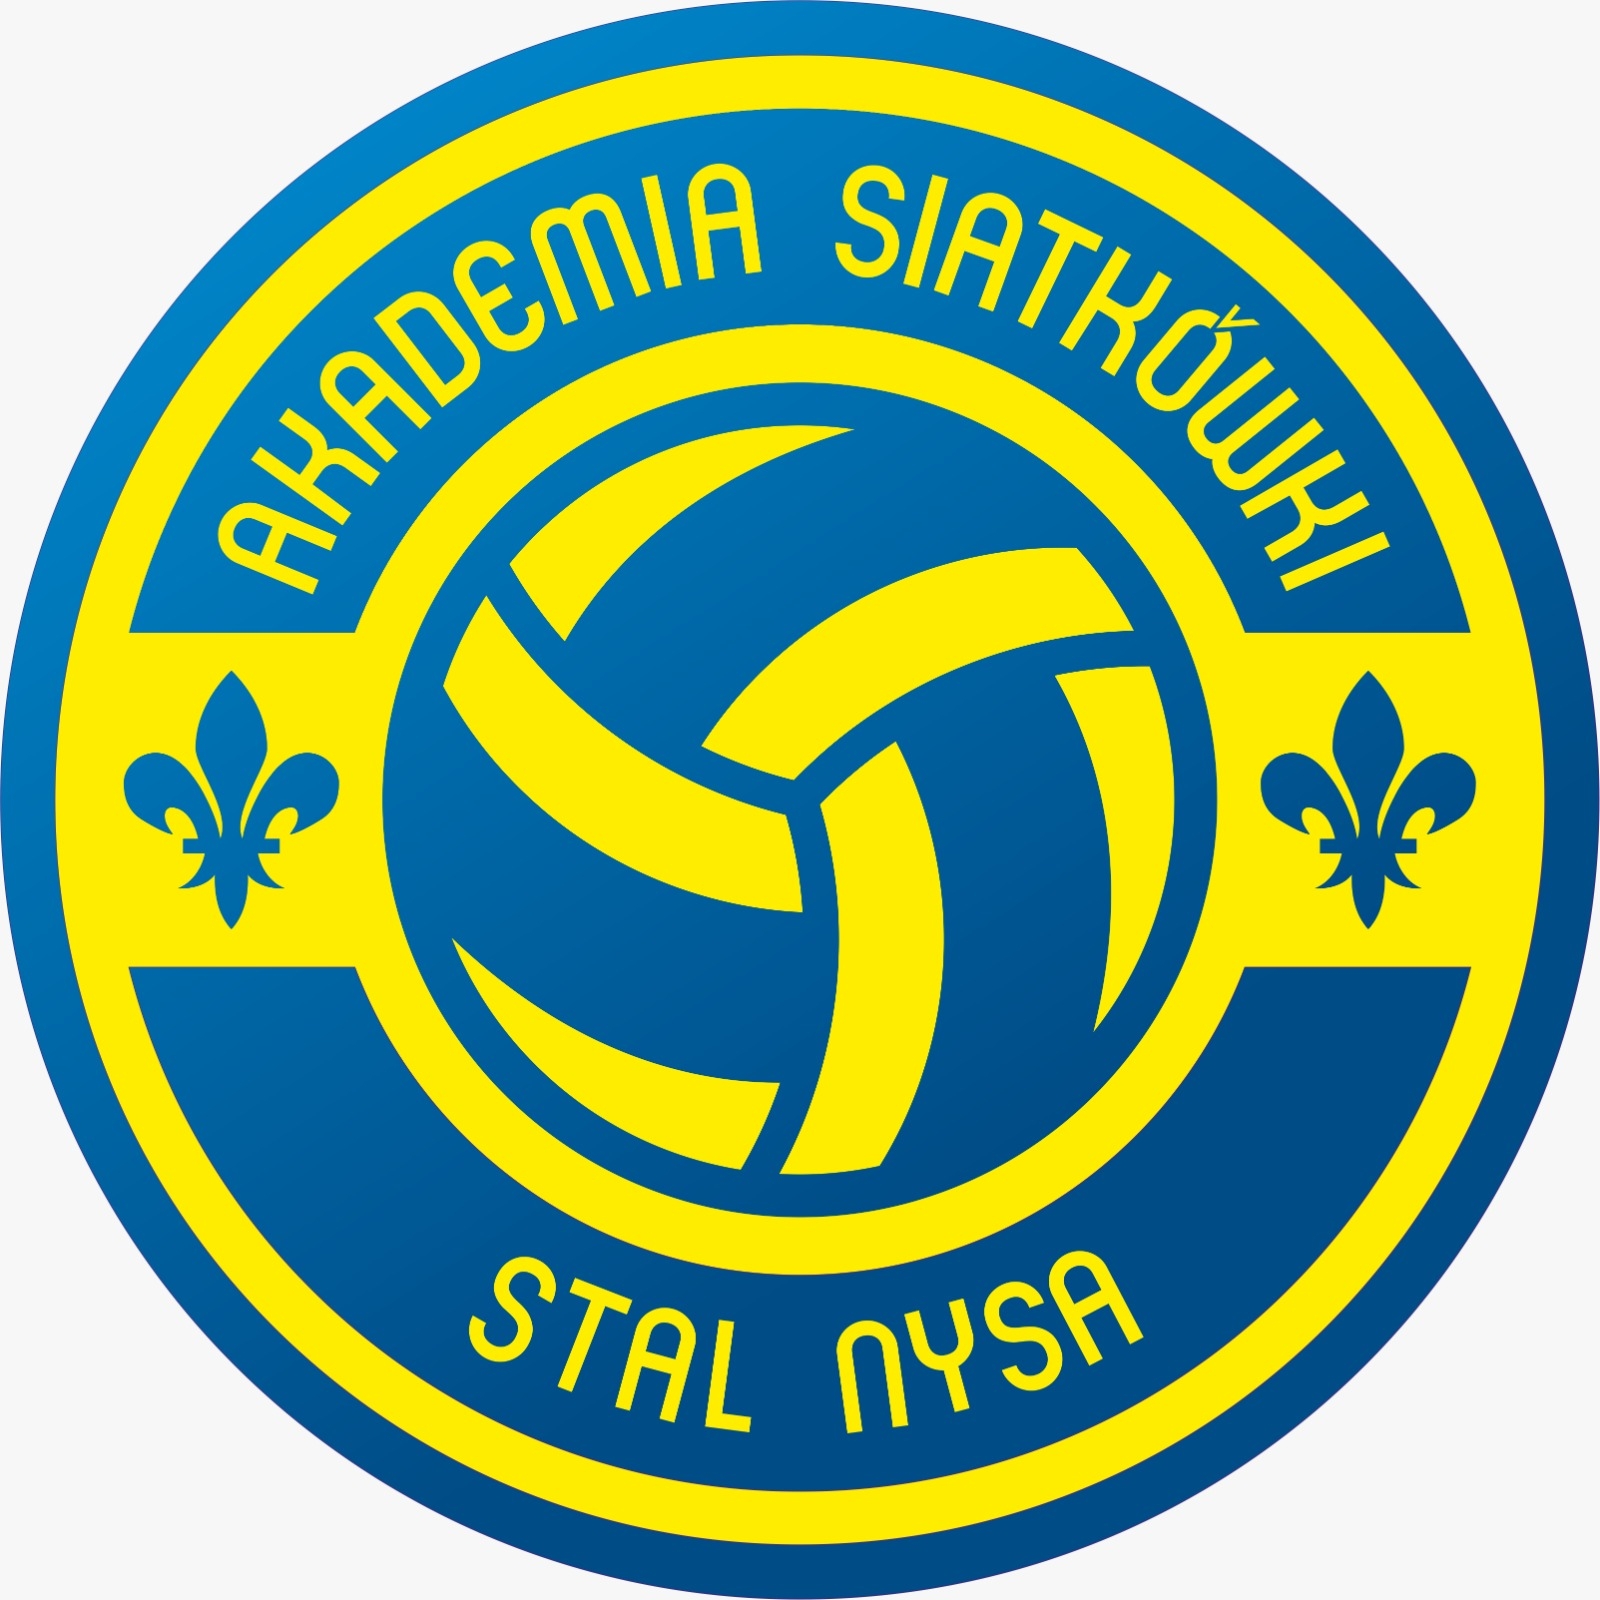 AS STAL Nysa Logo